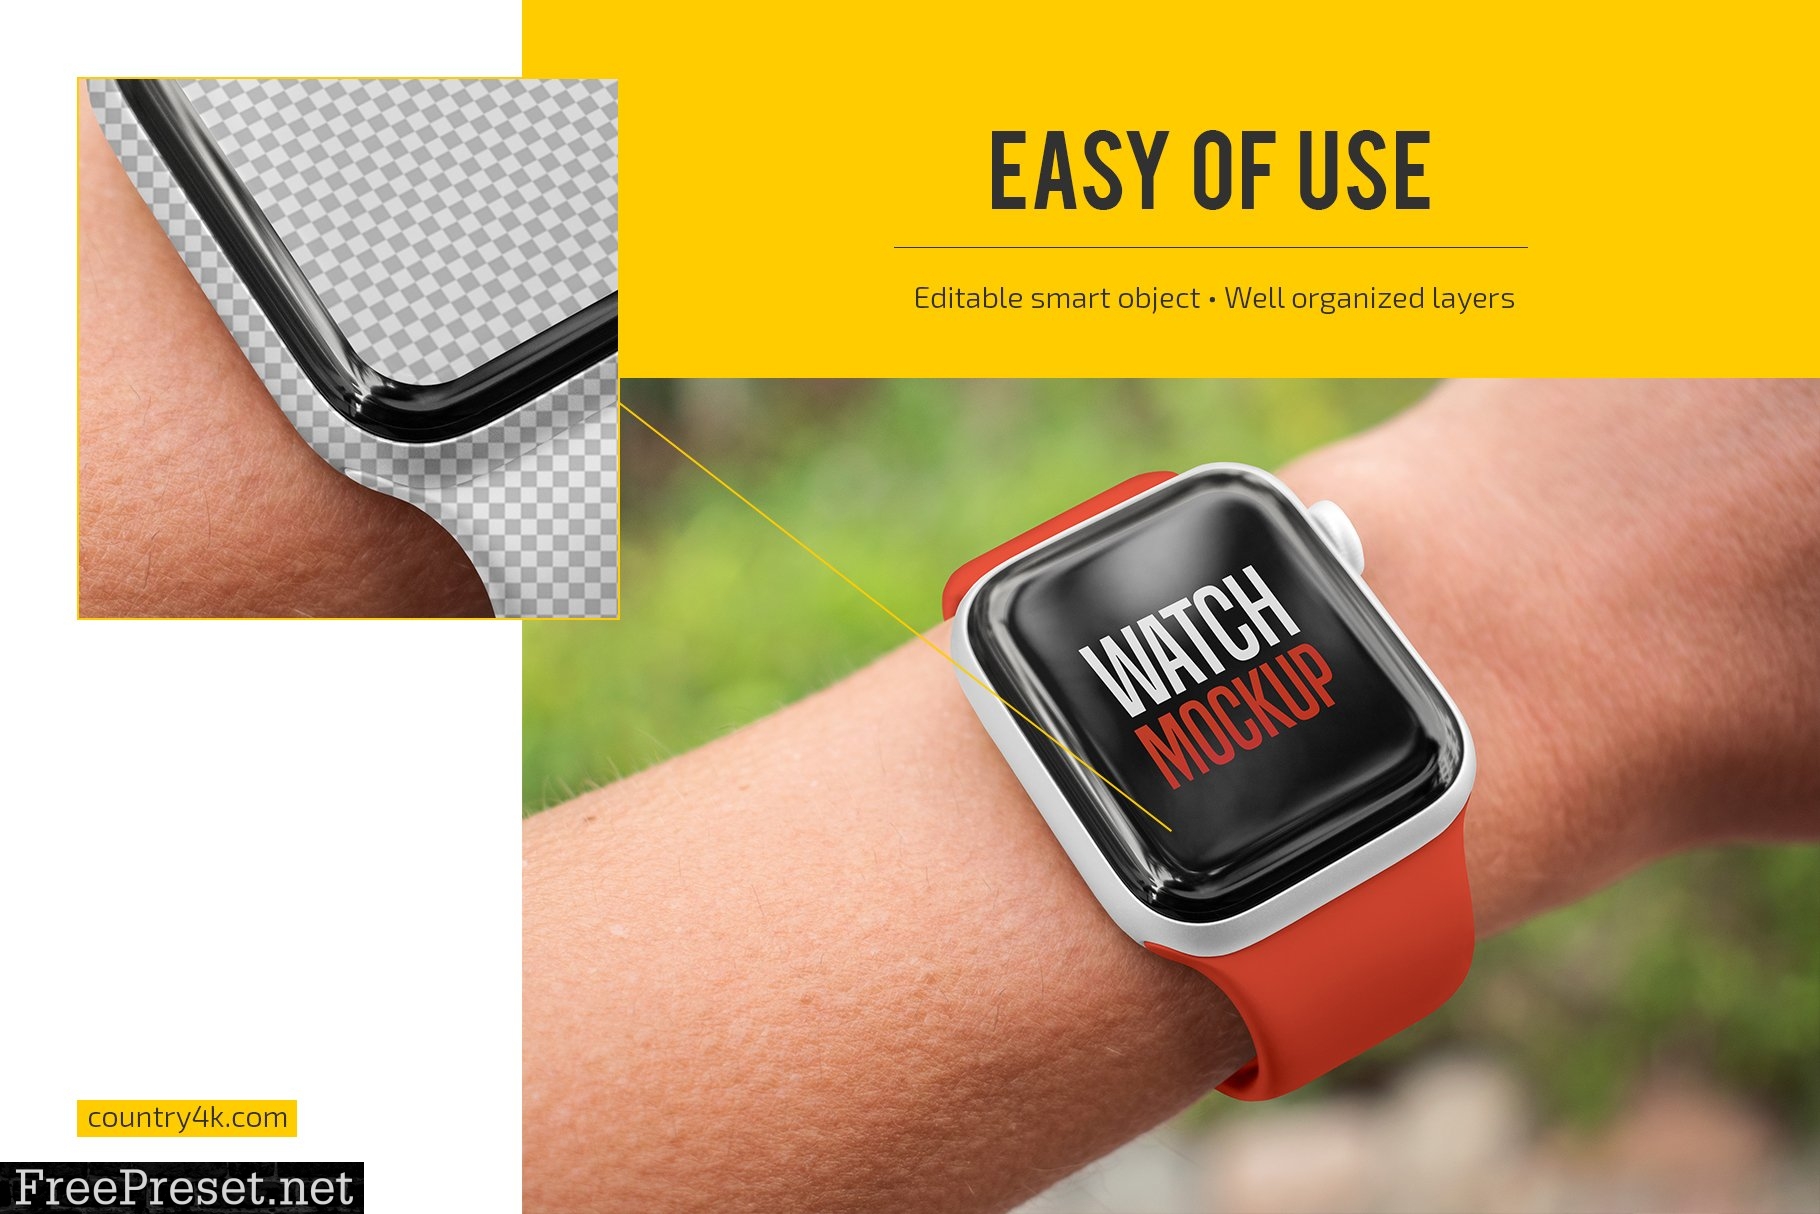 Smart Watch Mockup Set 5999449